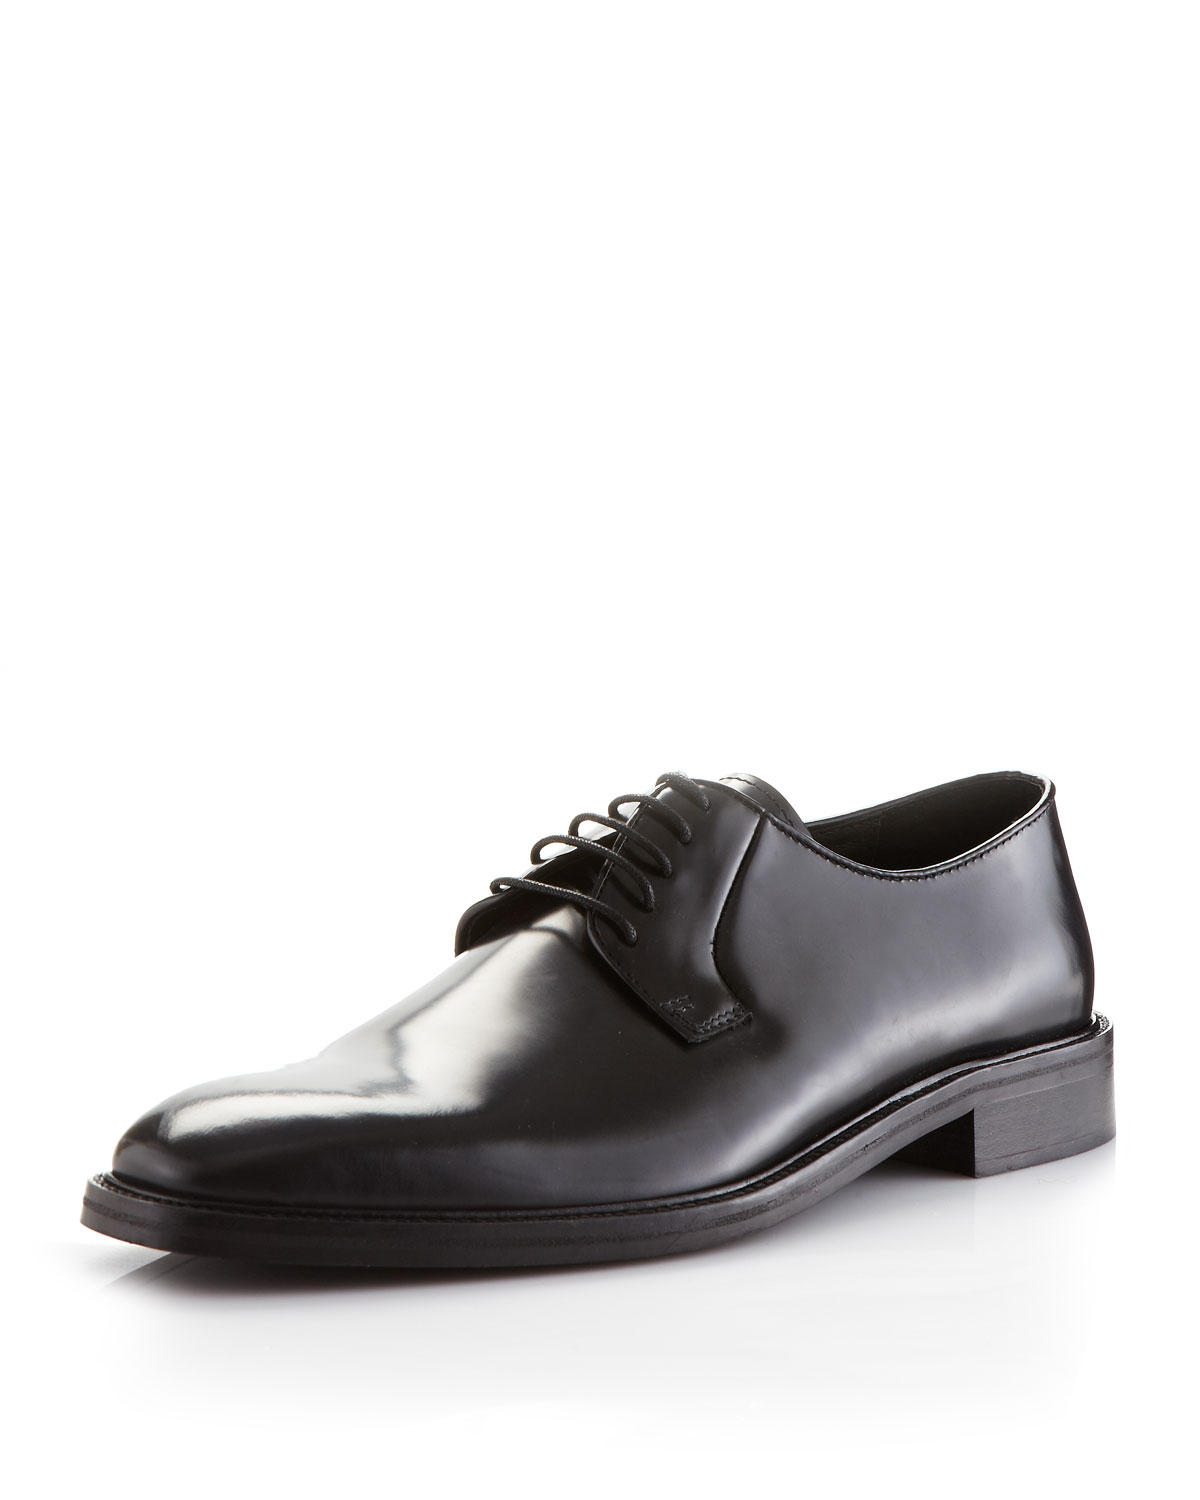 Lyst - Kenneth cole Style Guide Dress Shoe Black in Black for Men